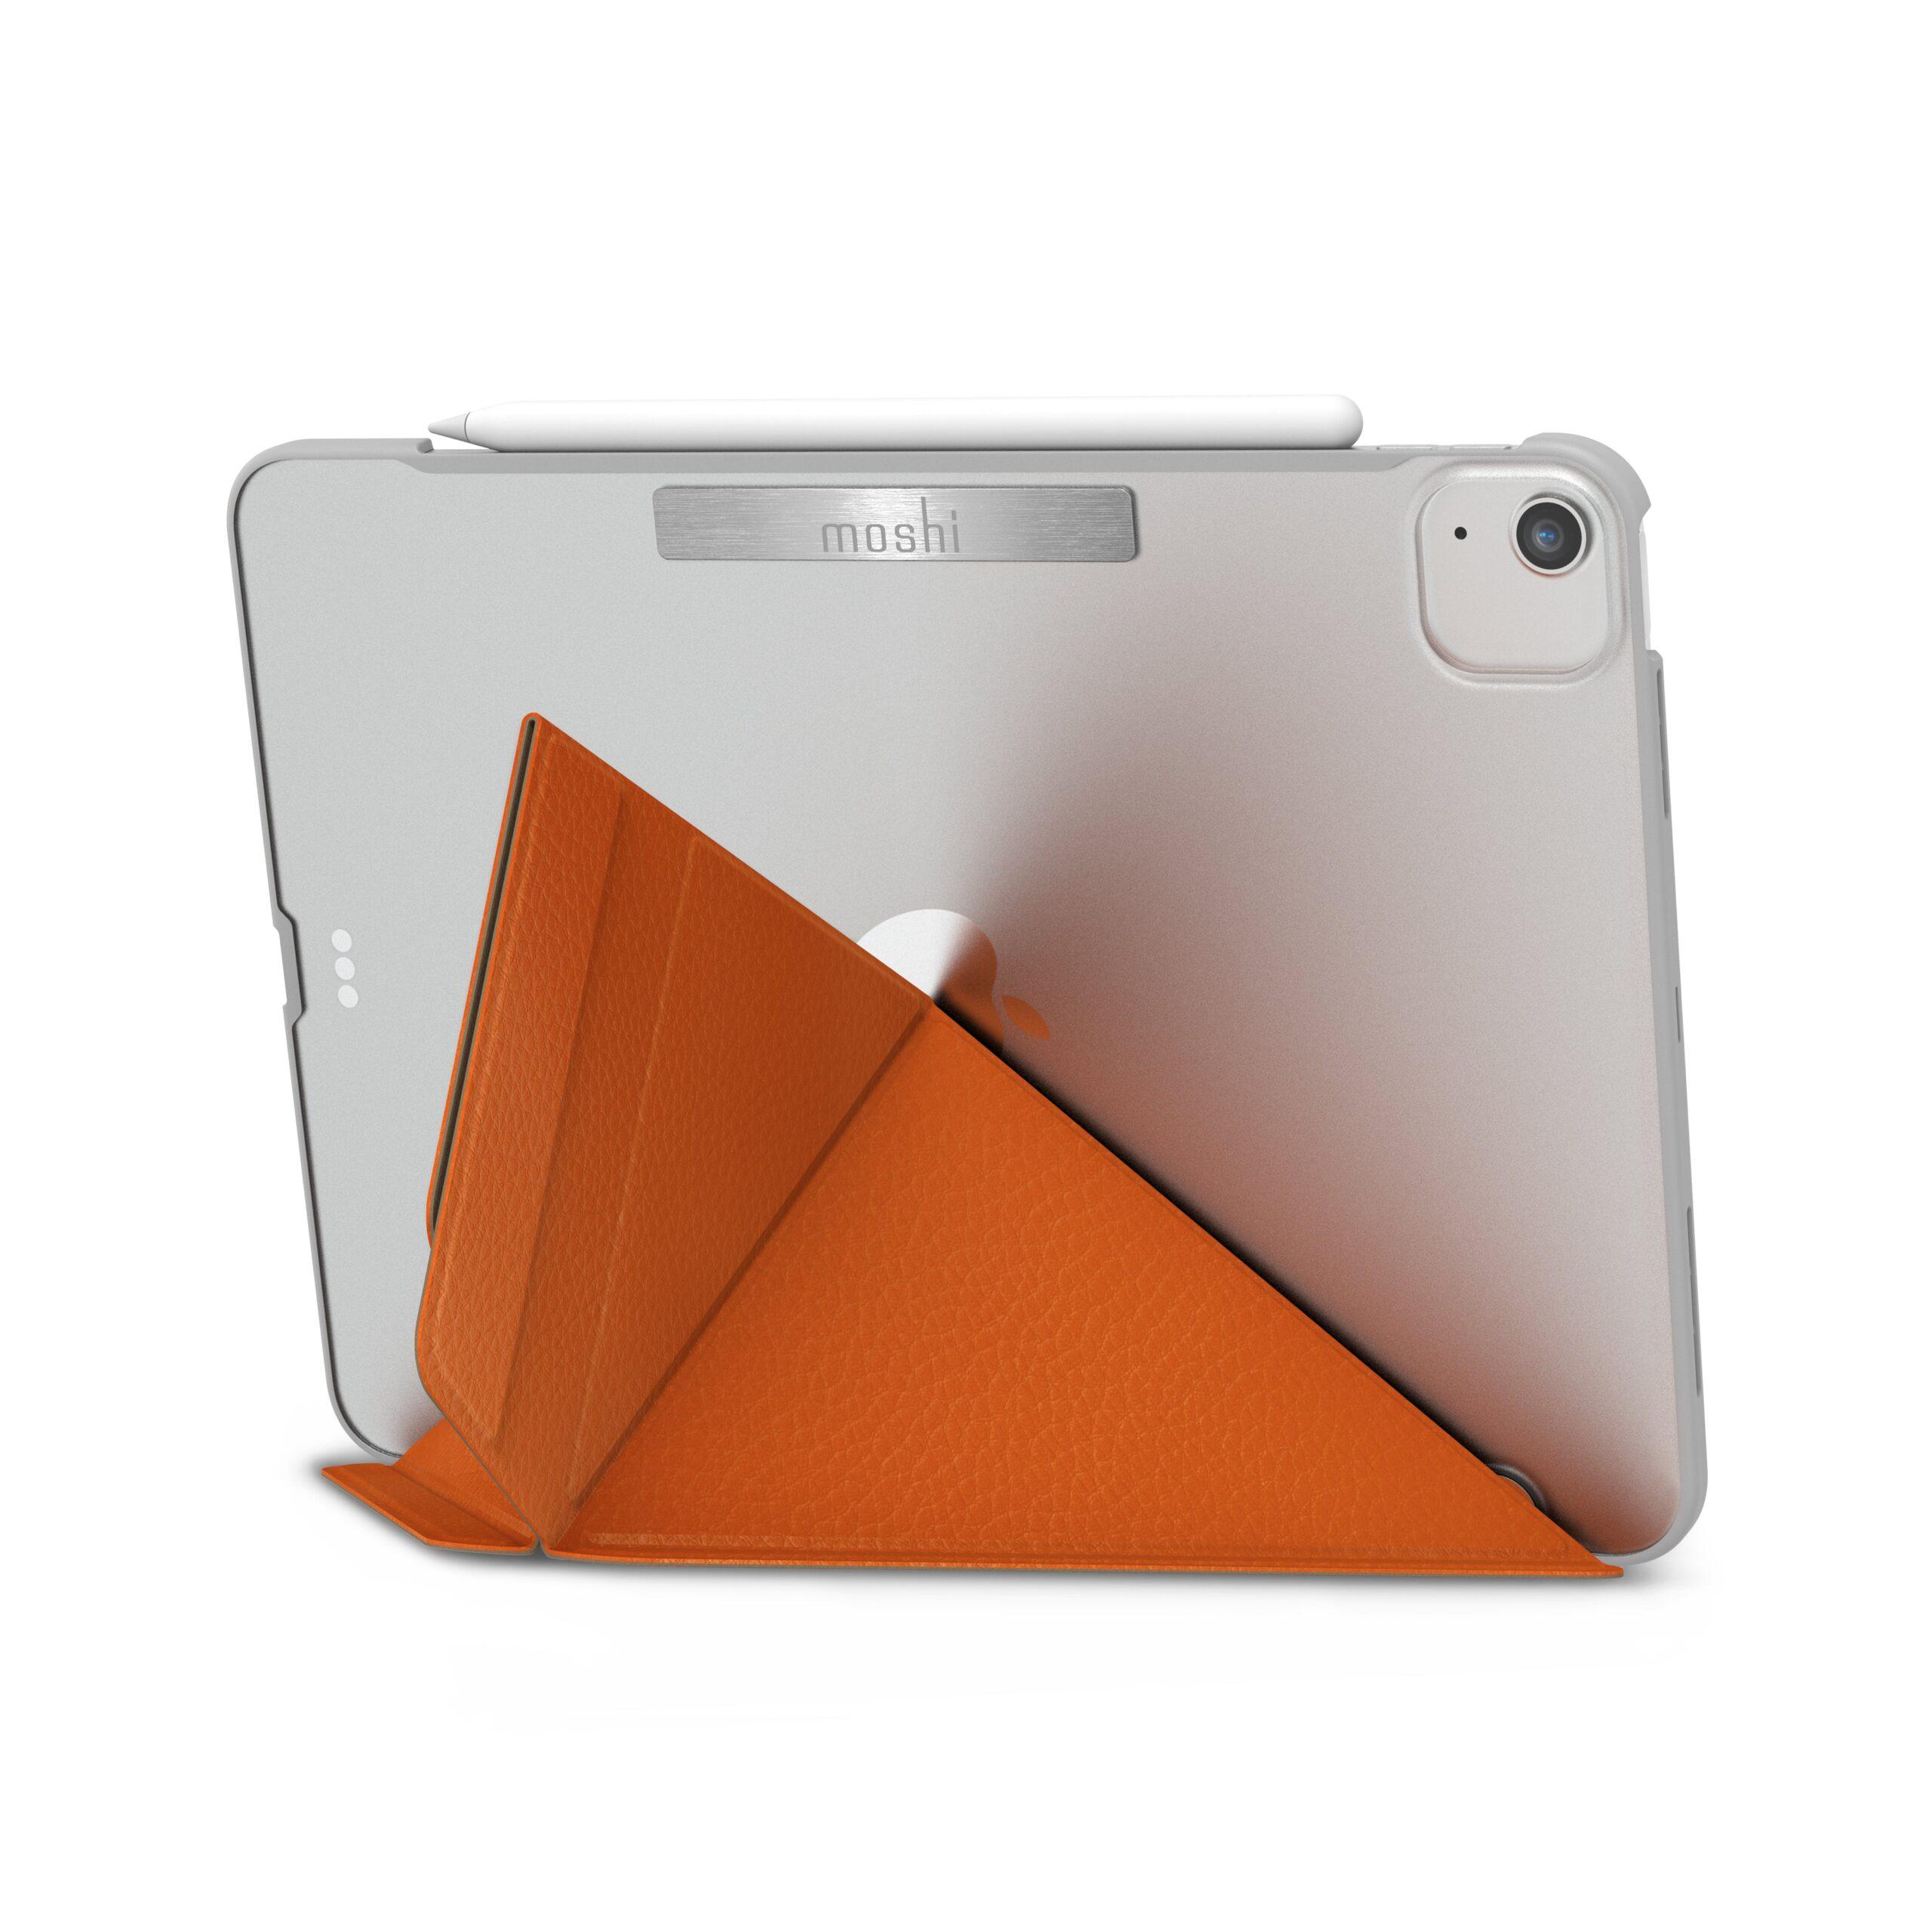 كفر آيباد قياس 11 إنش لون برتقالي VersaCover Case for iPad Air/iPad Pro -  Moshi - cG9zdDozNjM0NDM=